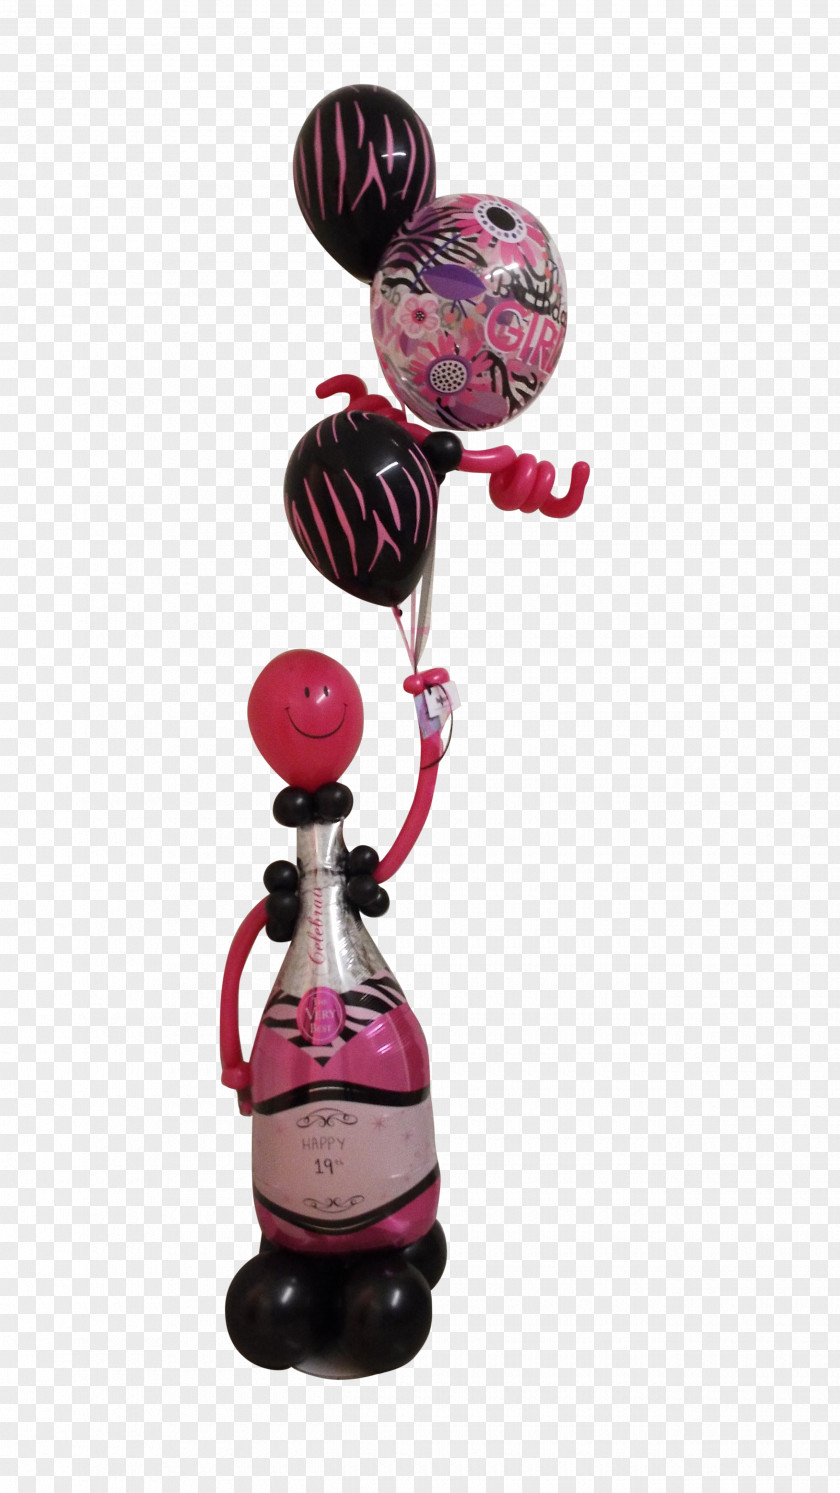 Balloon Gateshead Birthday Daughter PNG